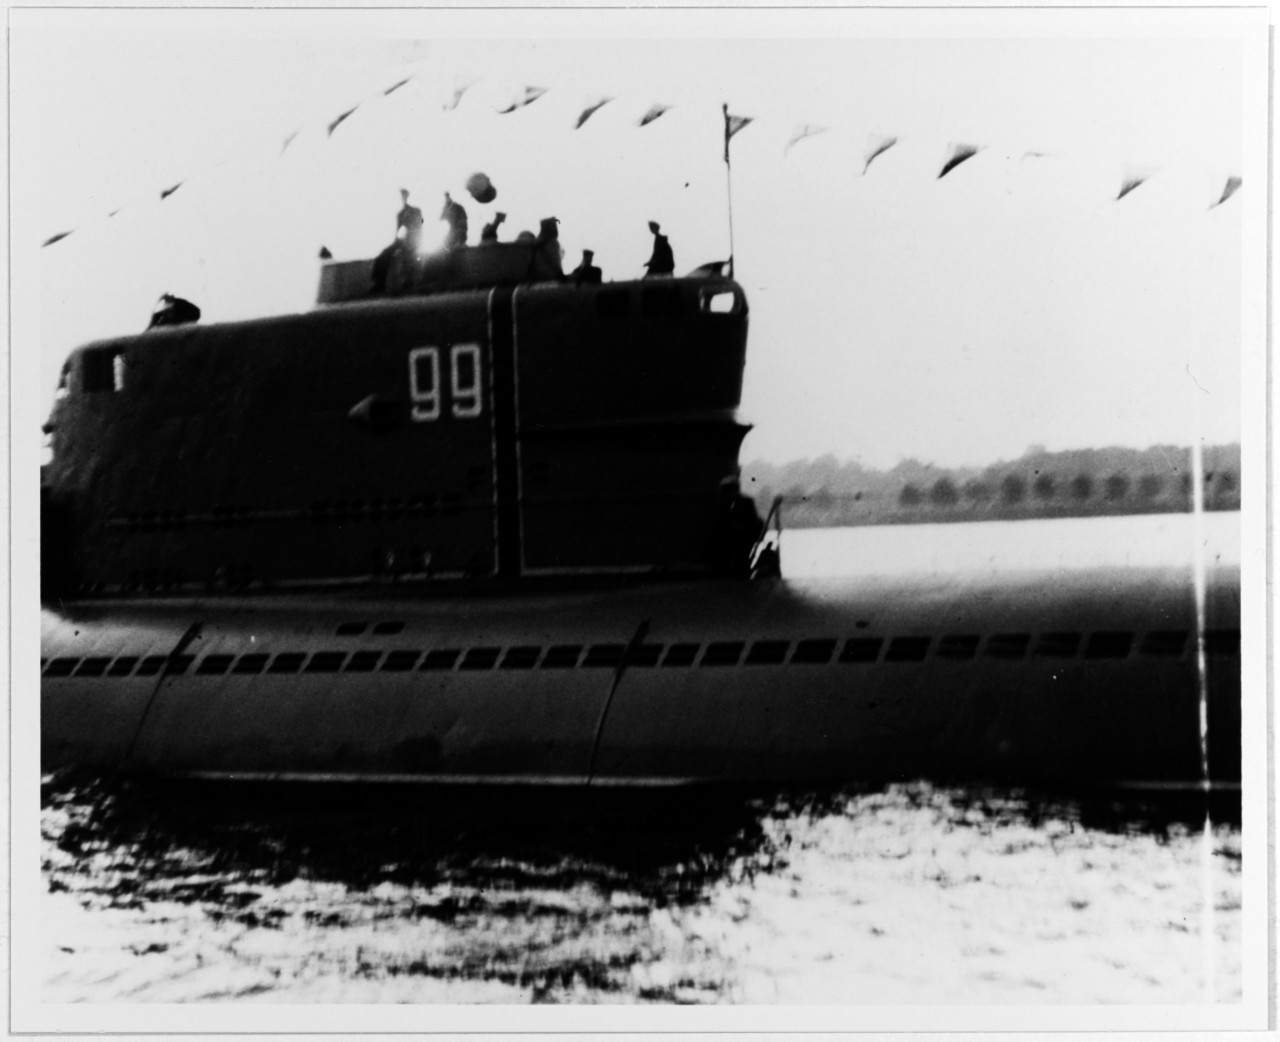 "Zulu" class submarine